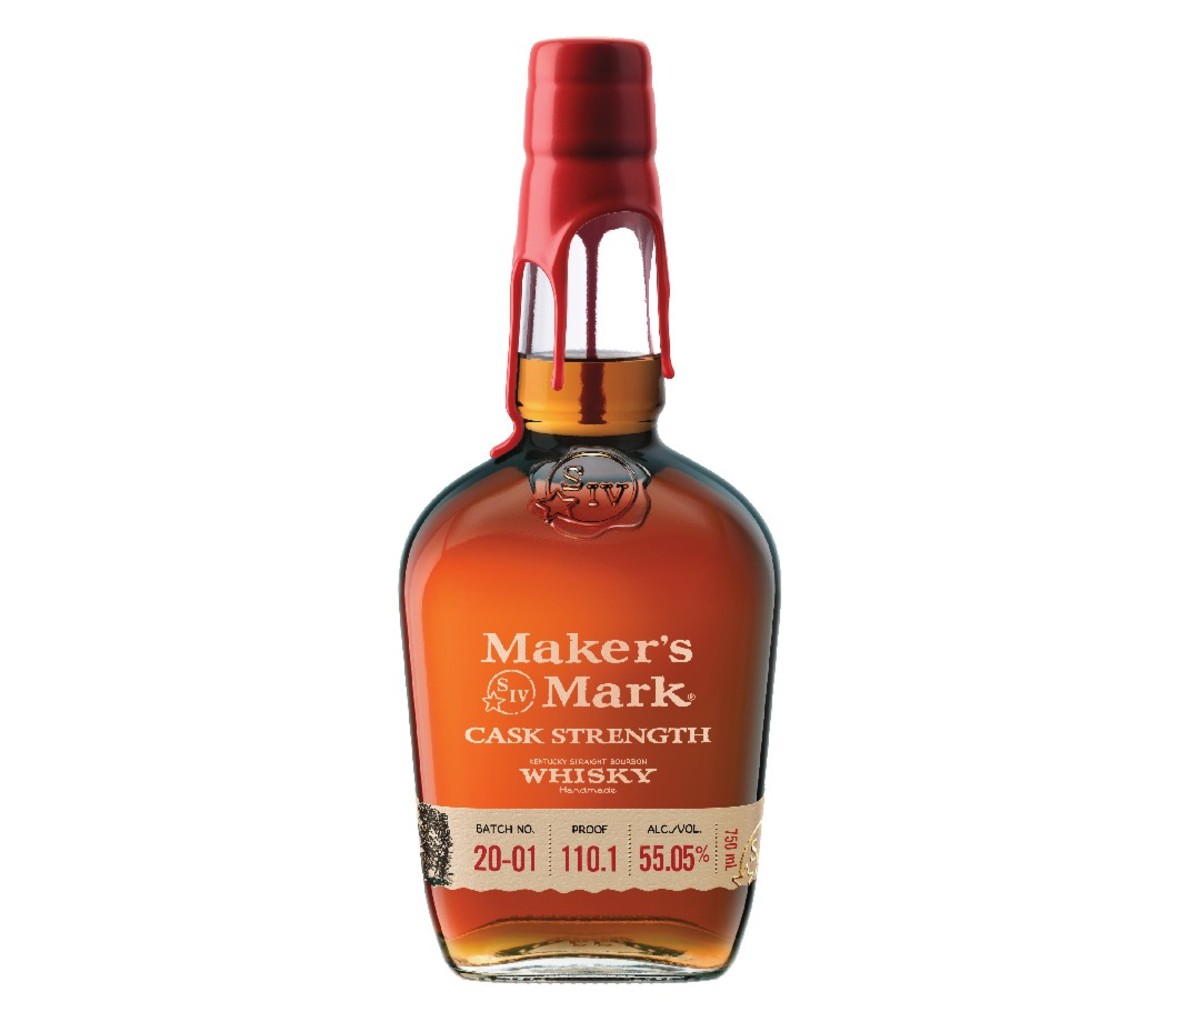 A bottle of Maker’s Mark Cask Strength bourbon.